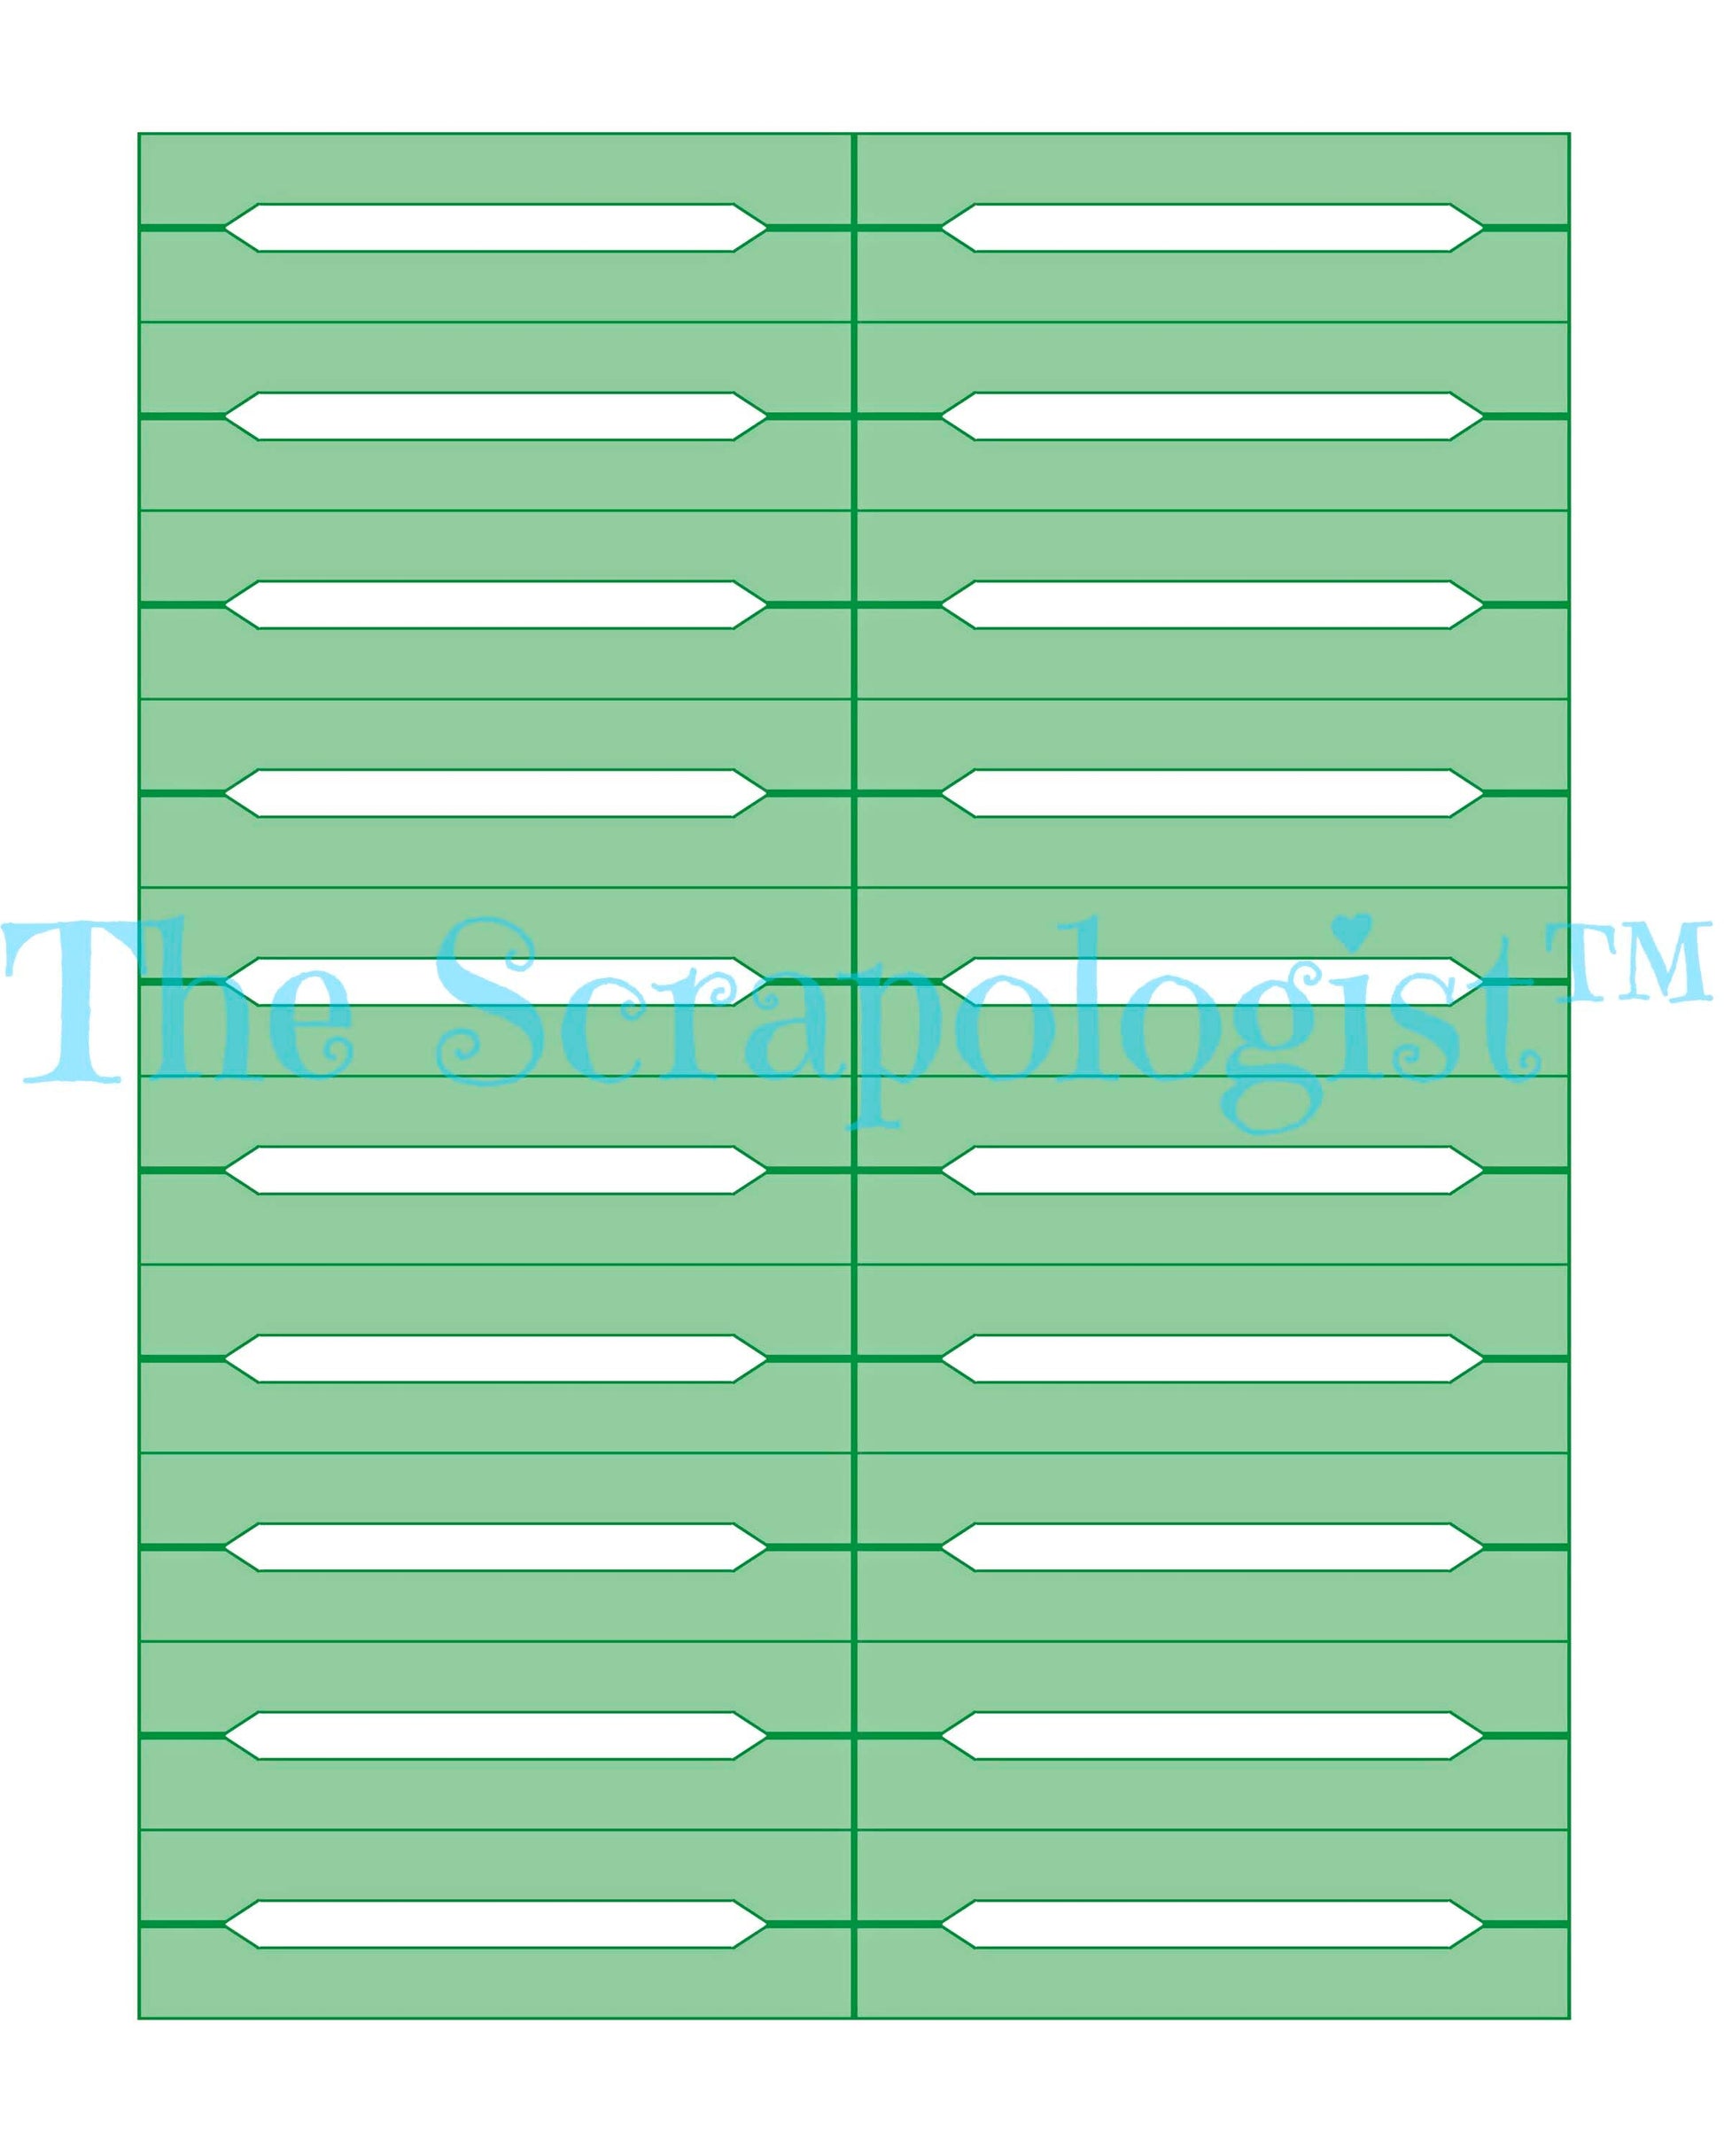 Jukebox Title Strips | .pdf and .jpg version